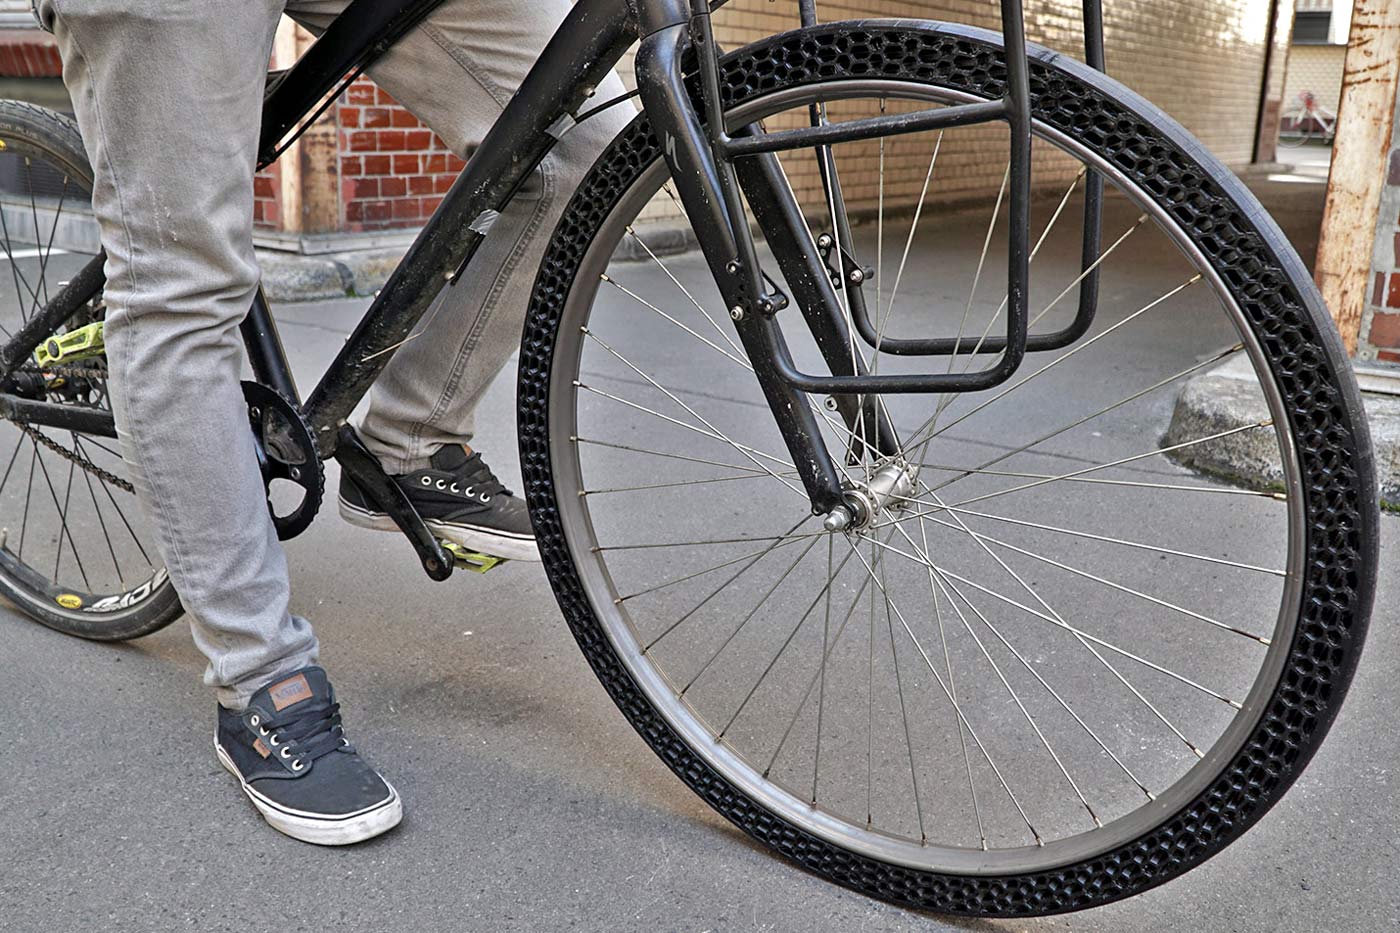 BigRep The Airless Tire prototype 3D printed NowLab bike tire